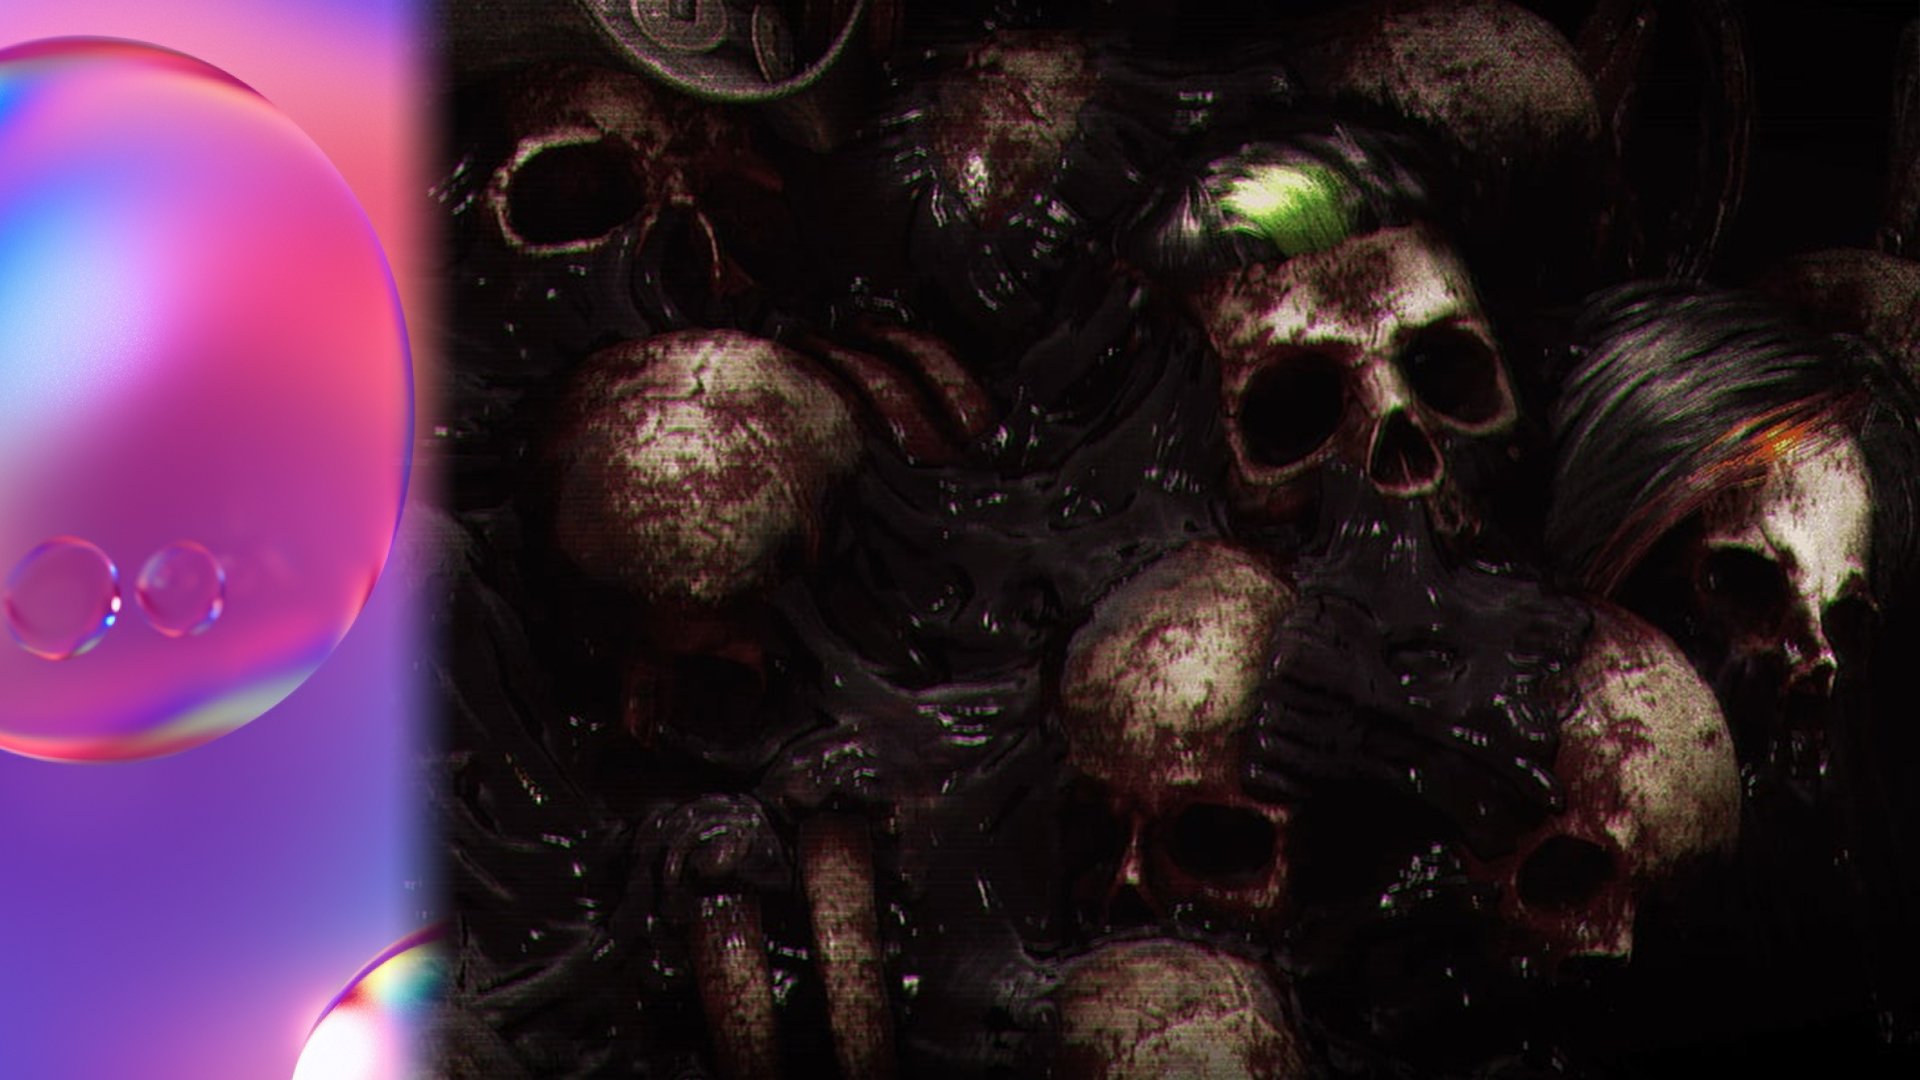 John Carpenter's Toxic Commando - Reveal Trailer